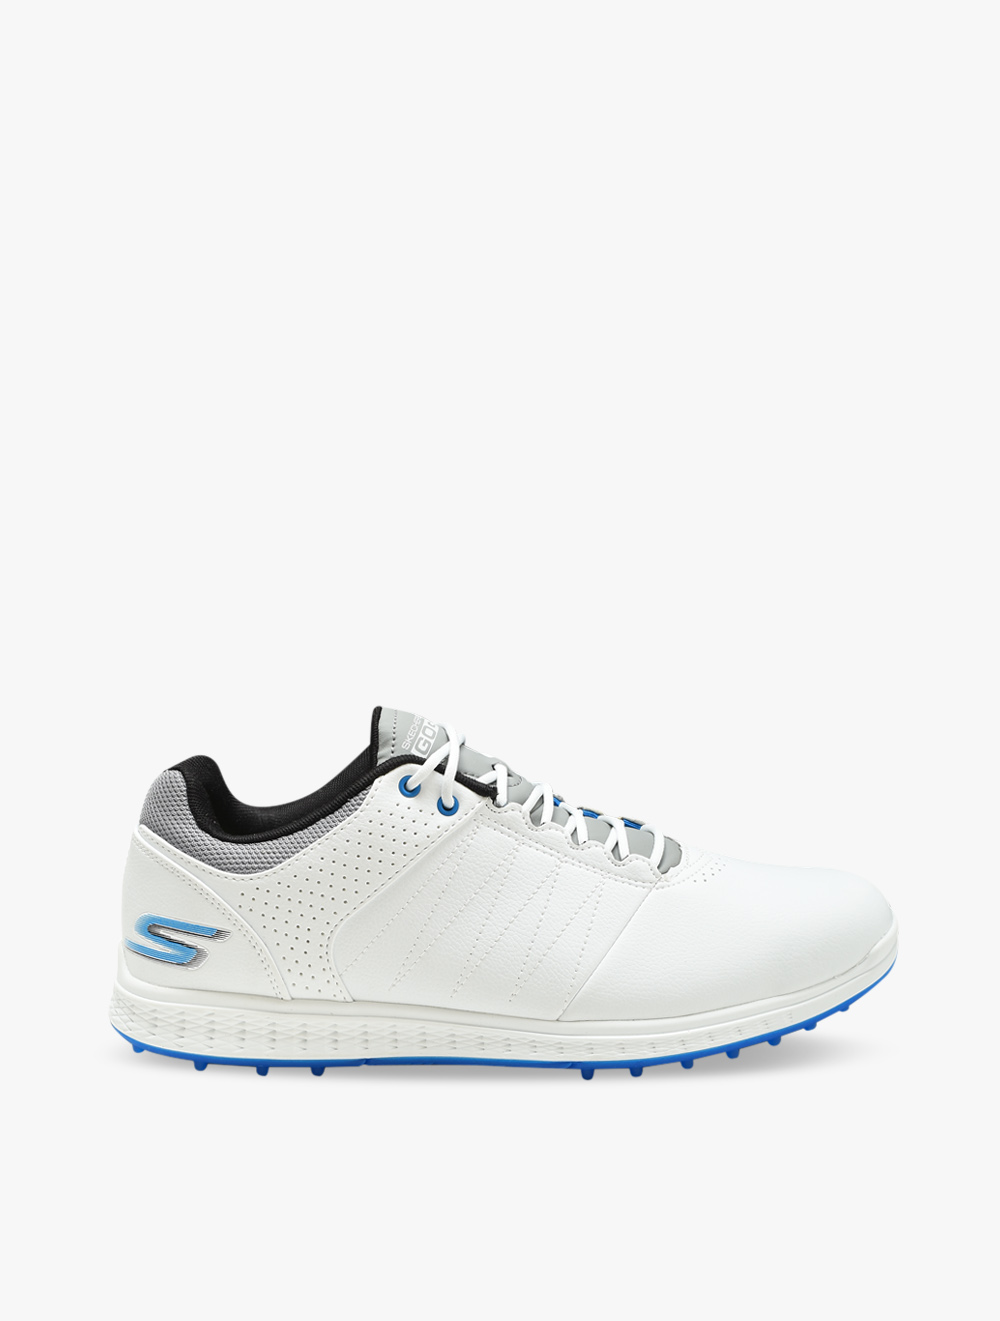 skechers pivot golf shoes